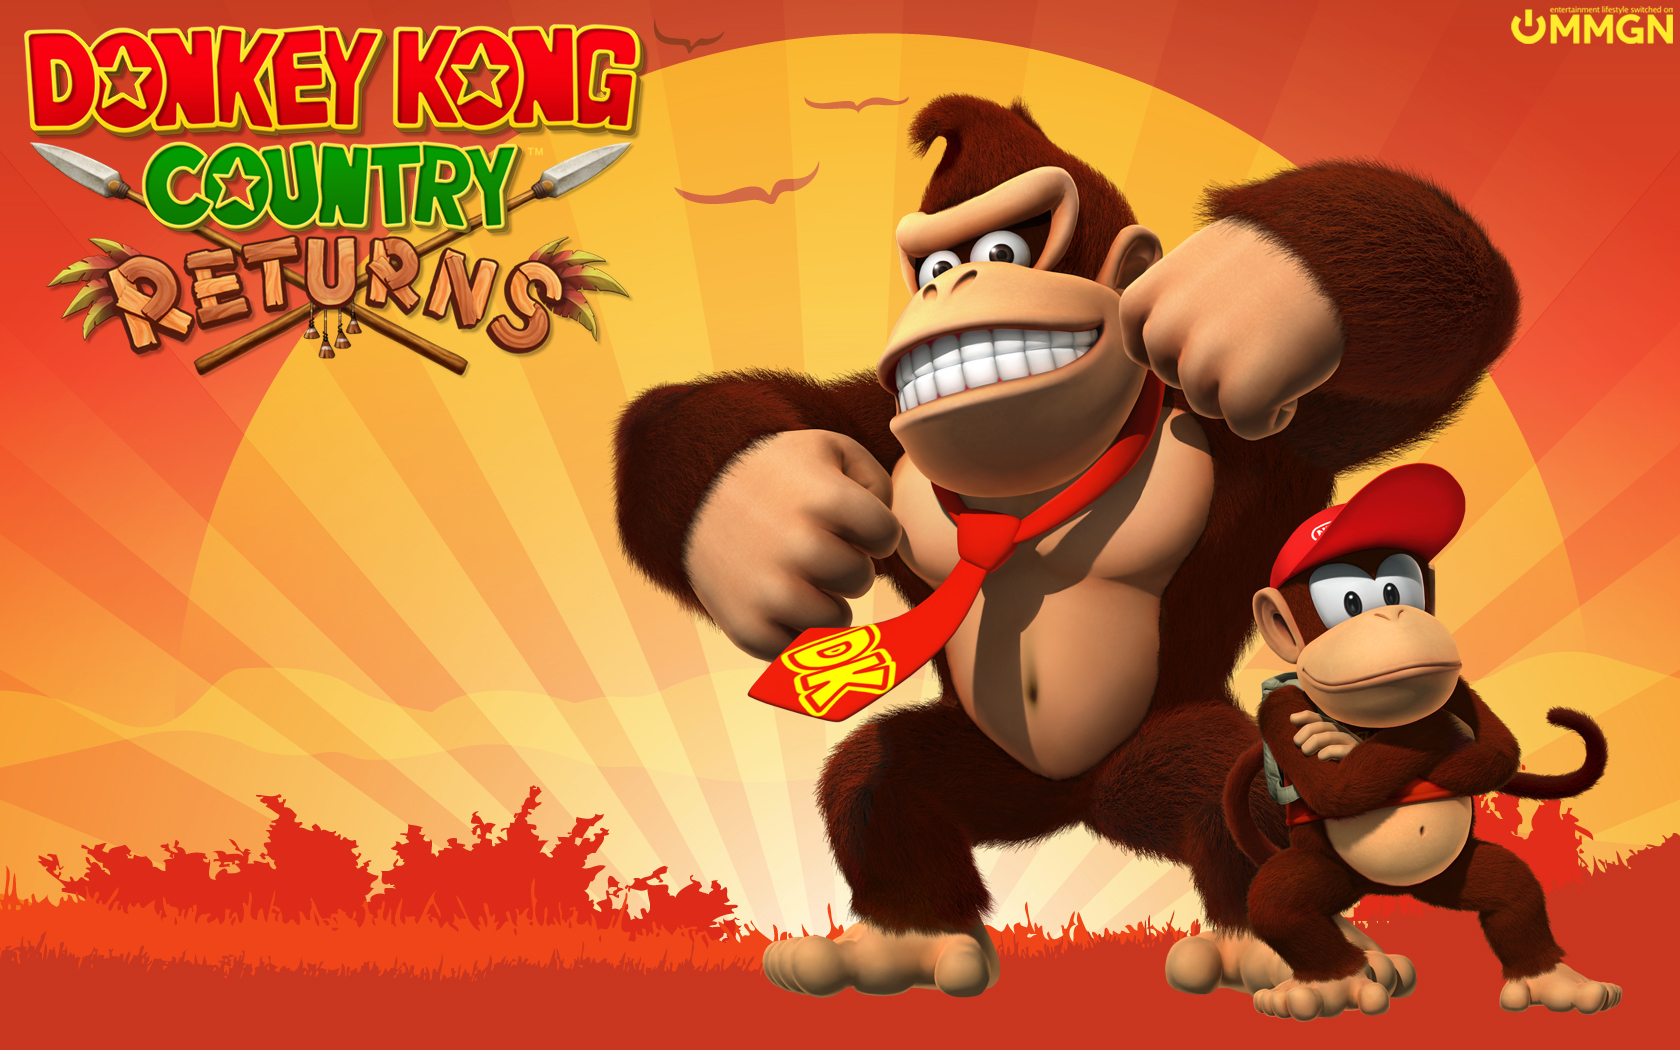 Donkey Kong Country Returns - Donkey Kong Wallpaper (25771518 ...